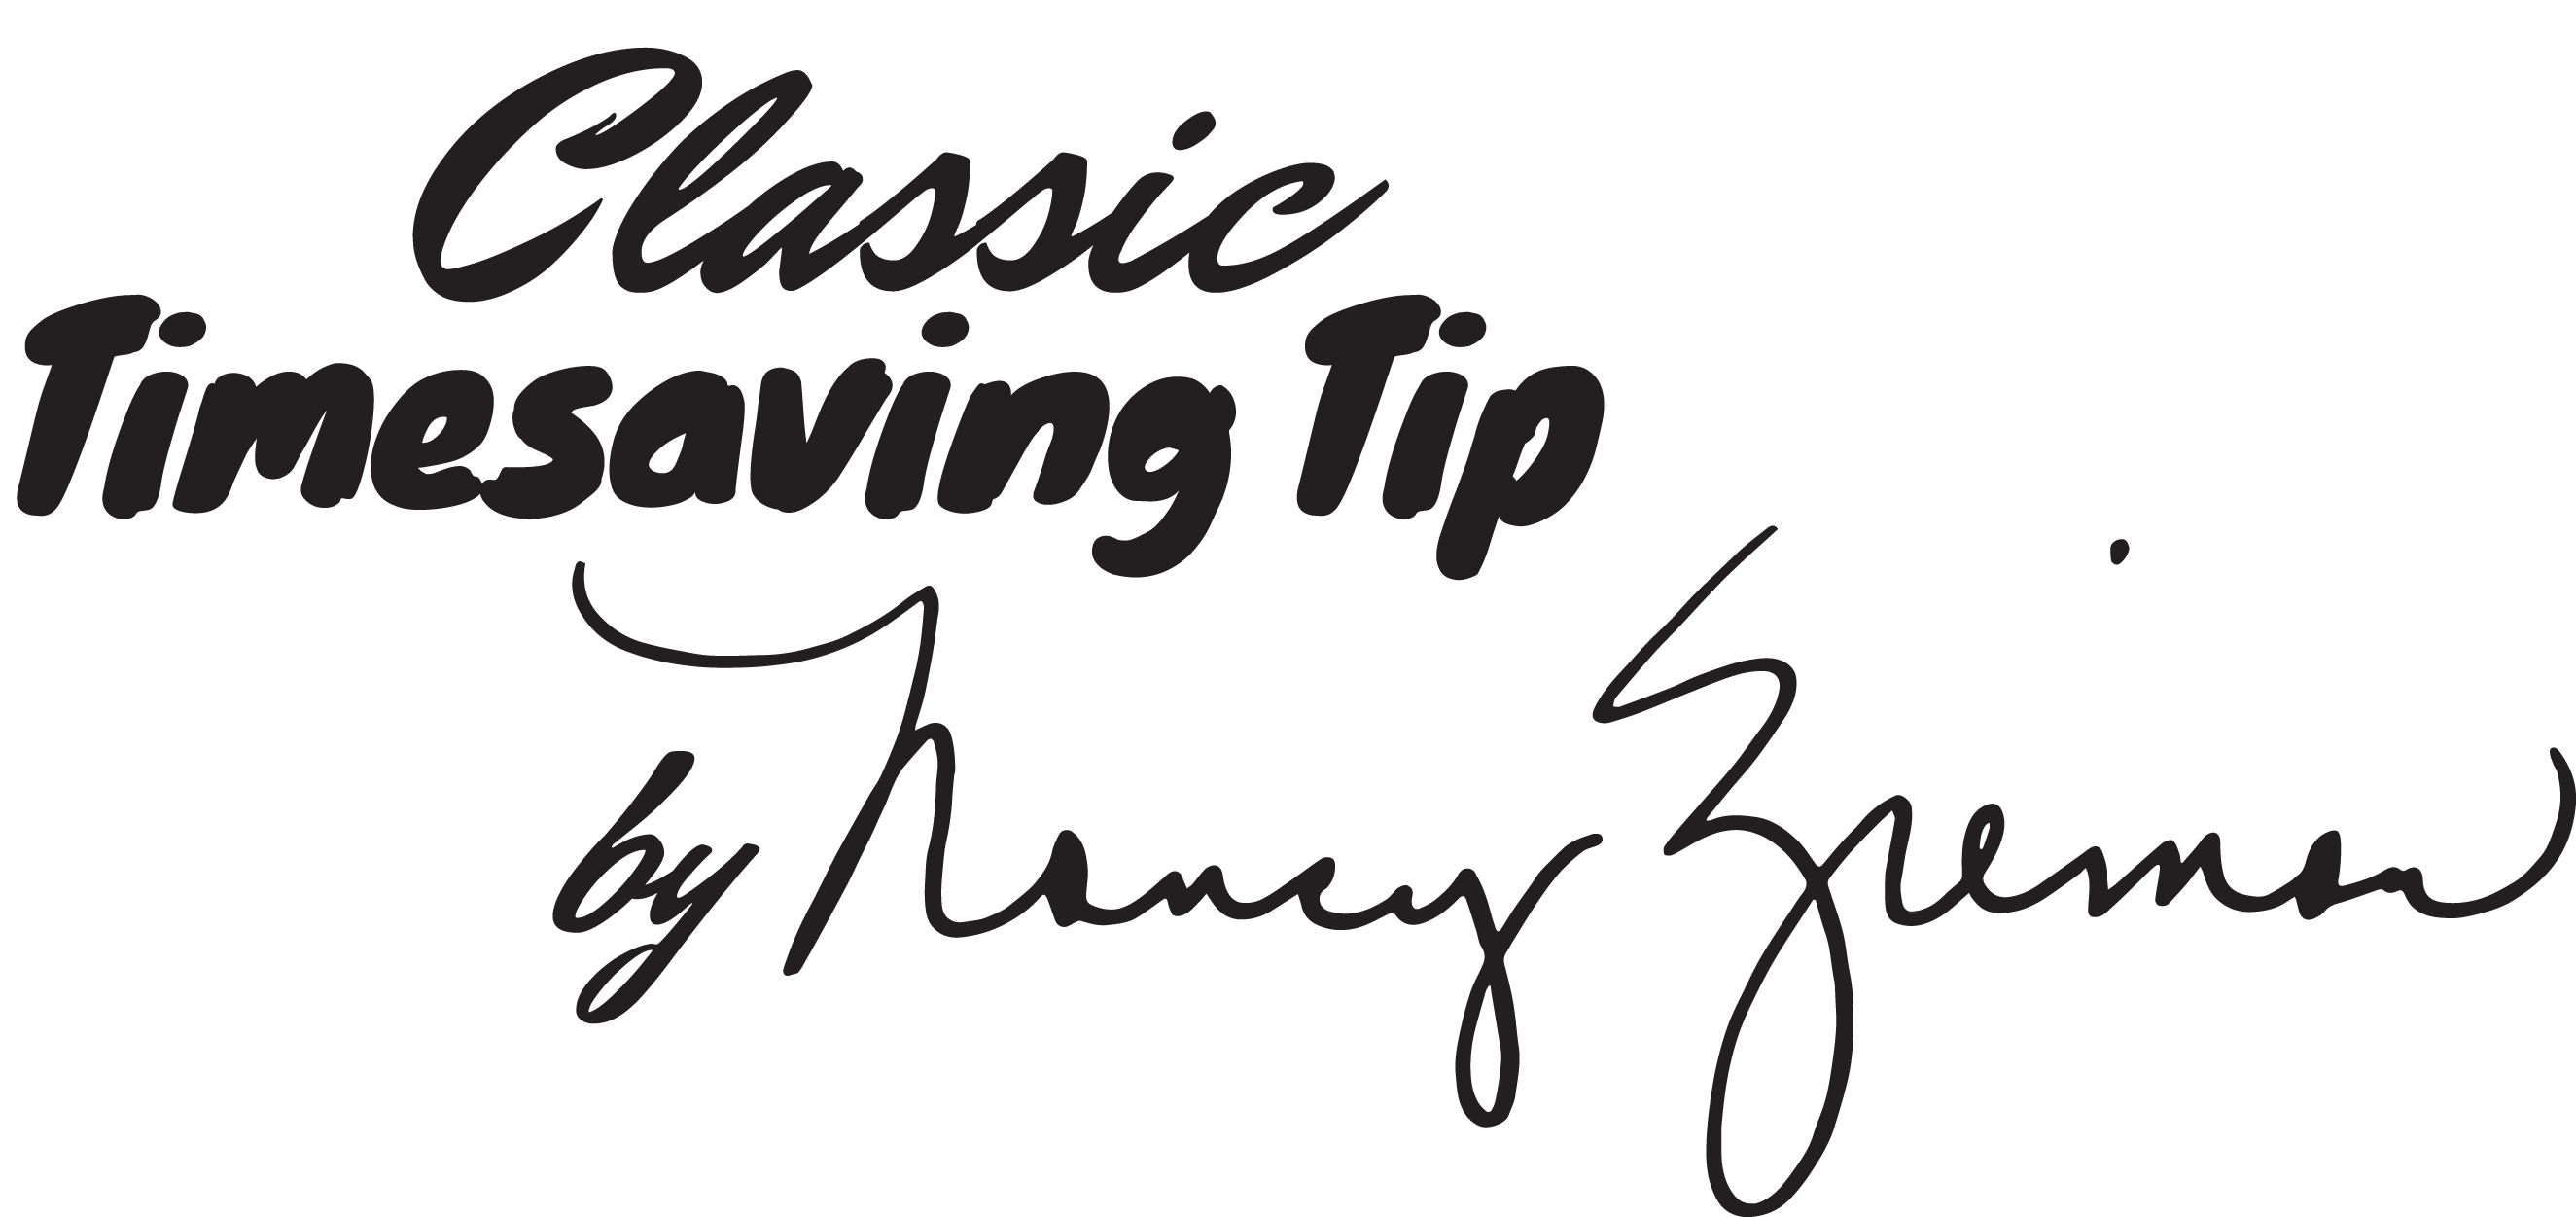 Timesaving Sewing Tips from Nancy Zieman